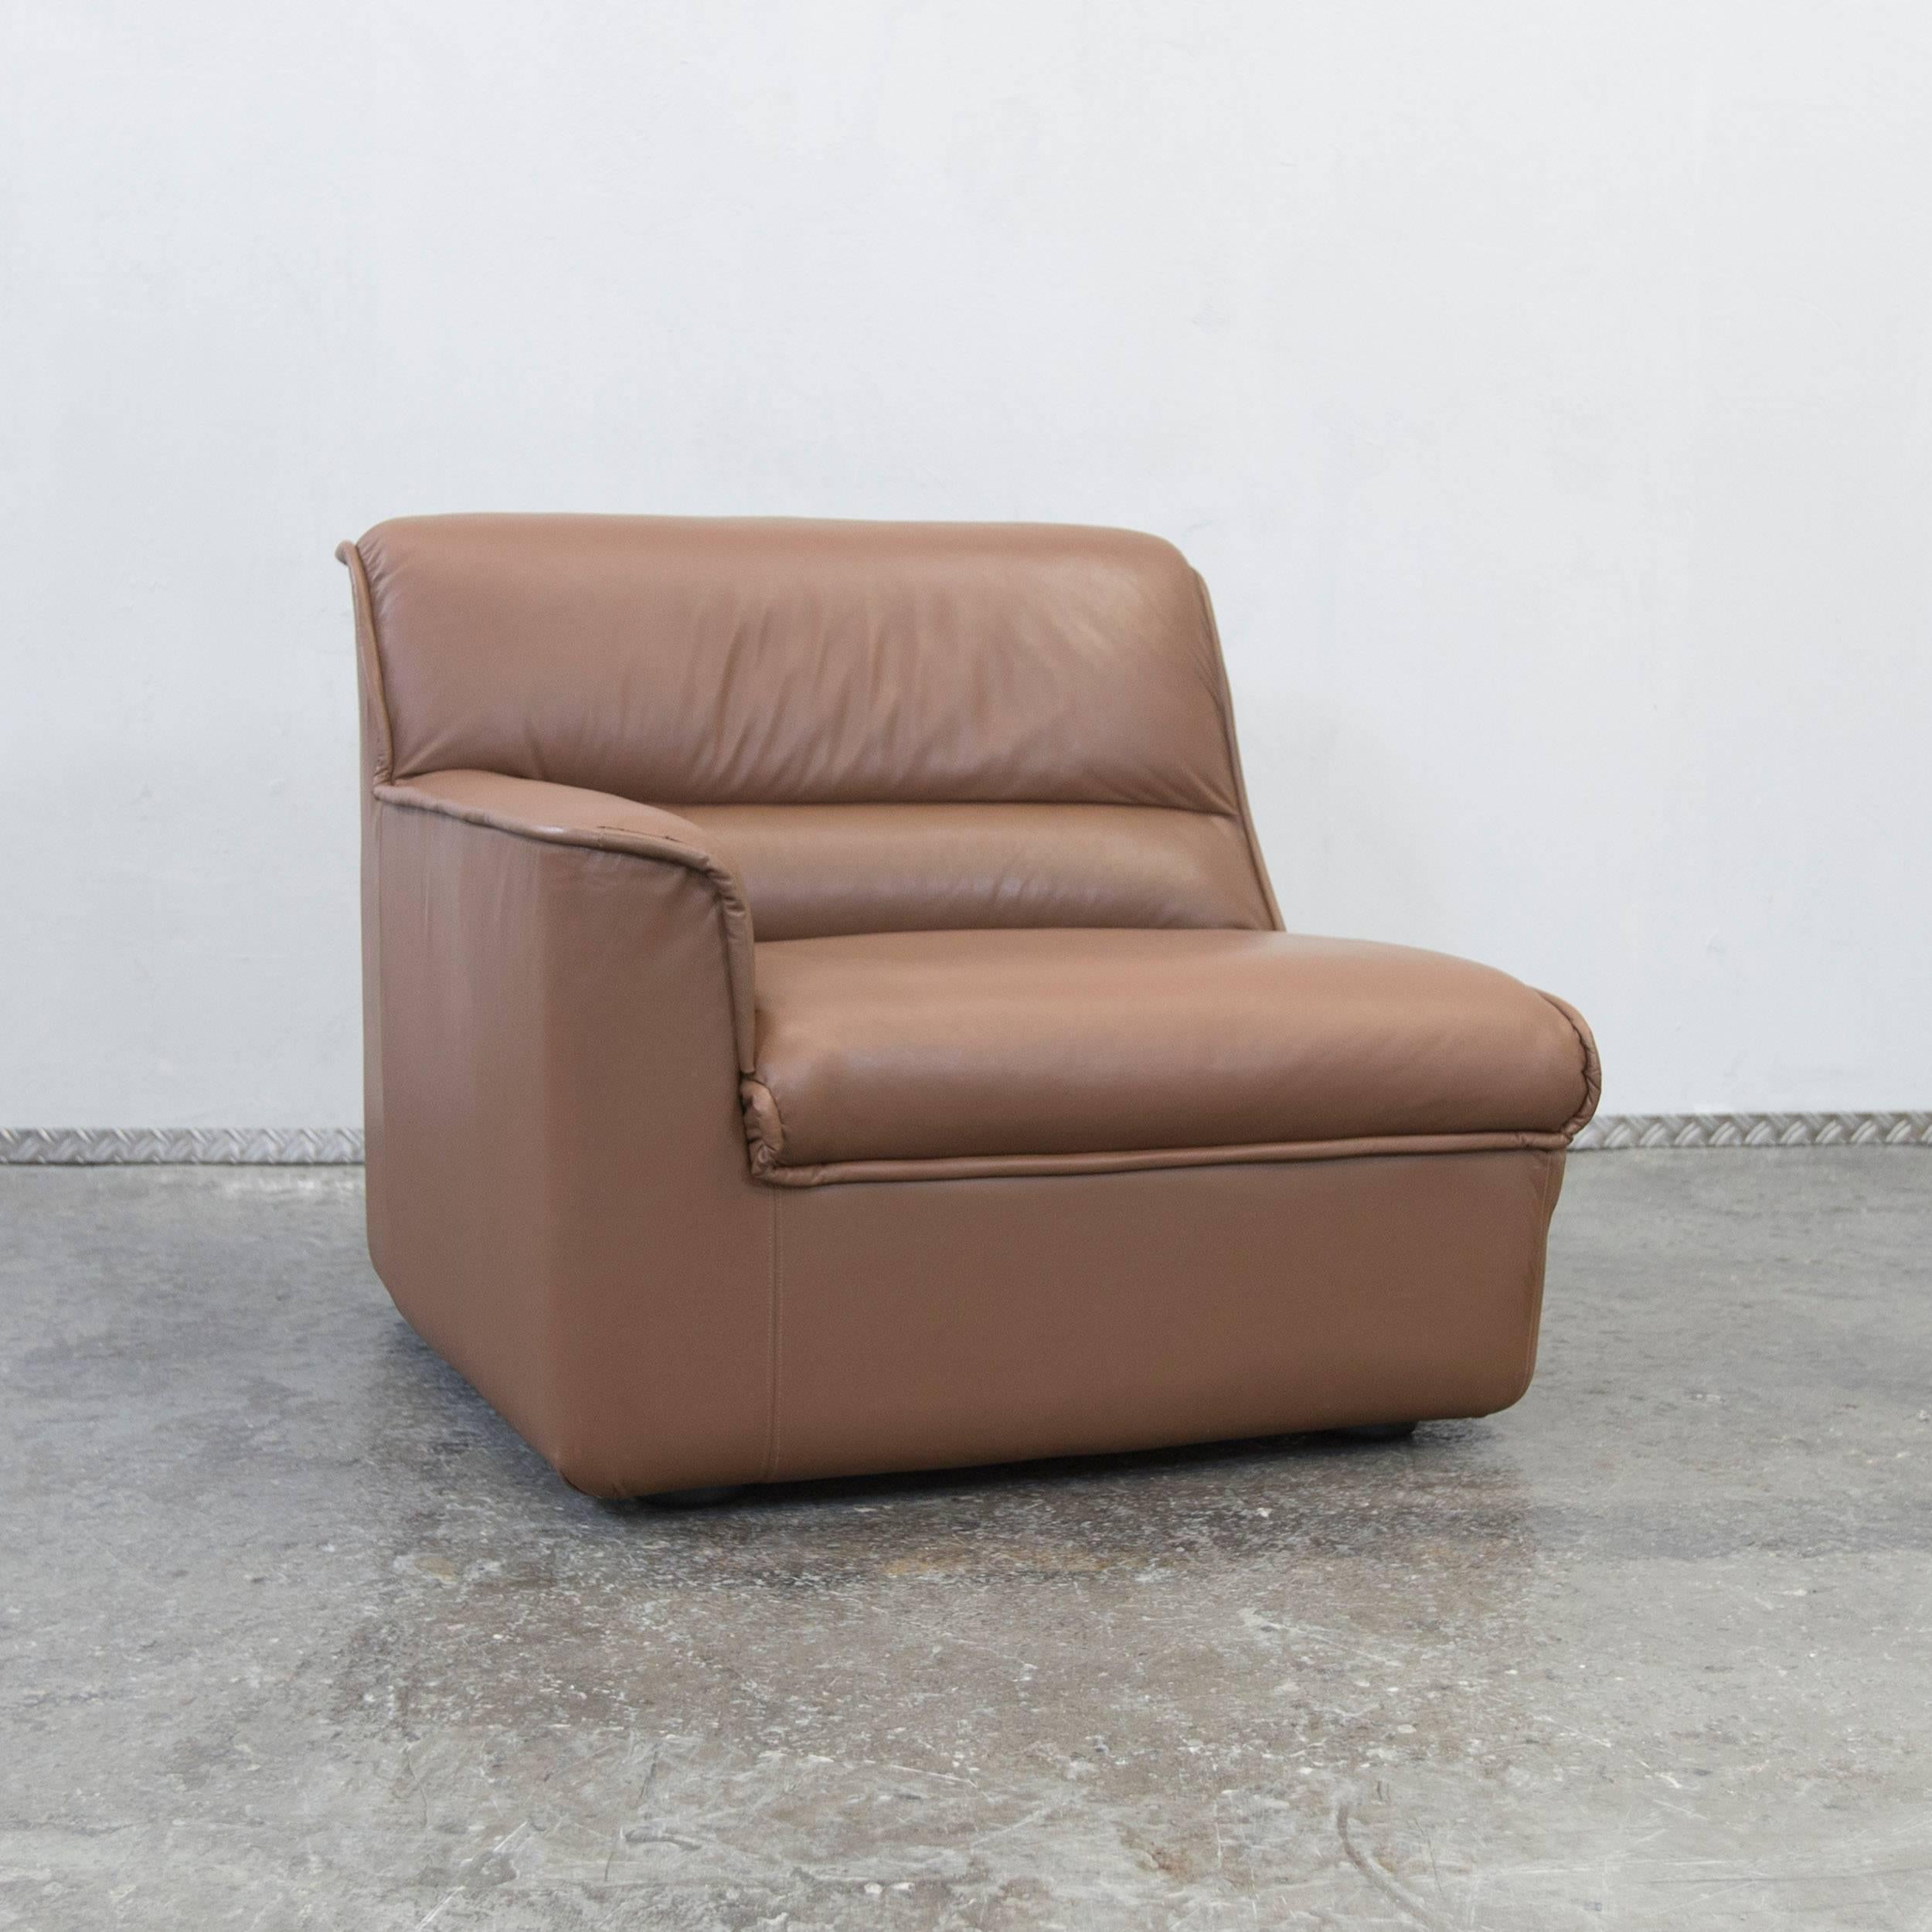 Contemporary COR Designer Leather Modular Sofa Set Brown Couch Vintage Retro